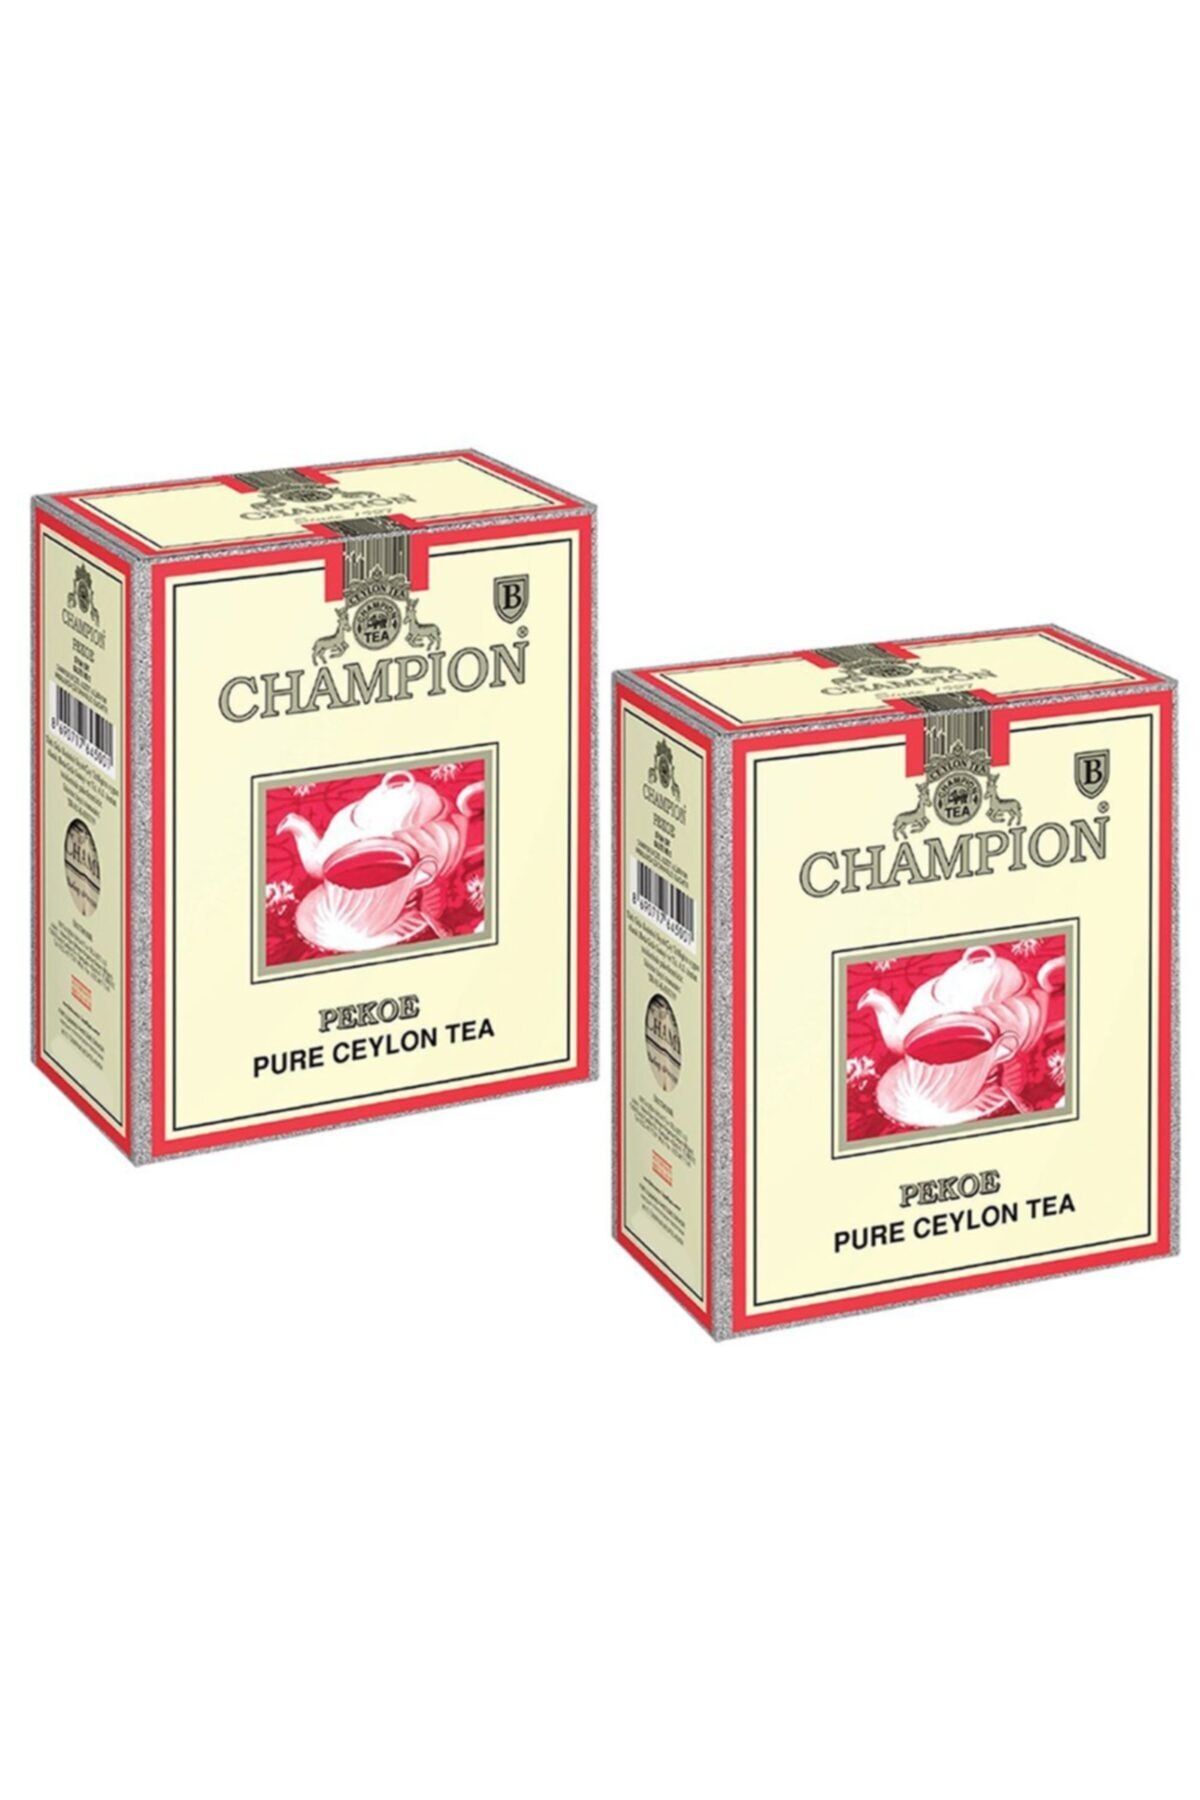 Champion Pekoe 1000 gr (SUPER PEKOE) X 2 Adet - Seylan Siyah Çayı